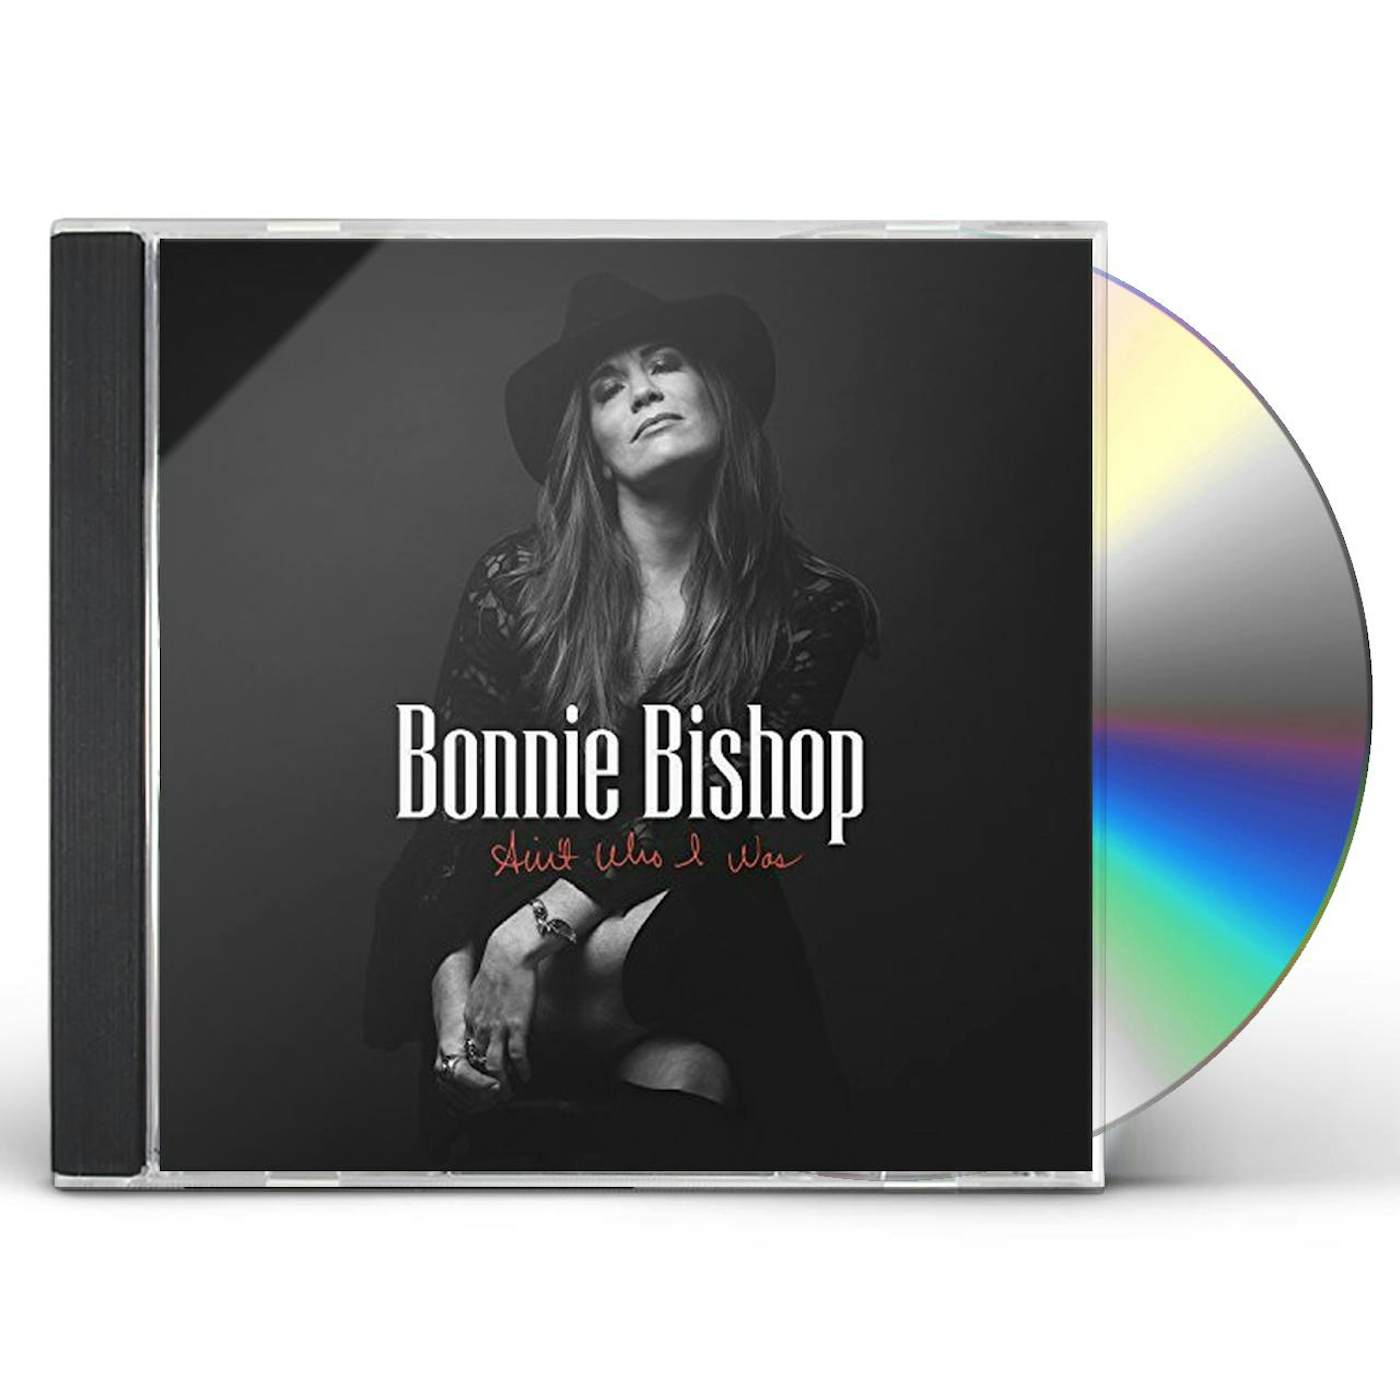 Bonnie Bishop AIN'T WHO I WAS CD